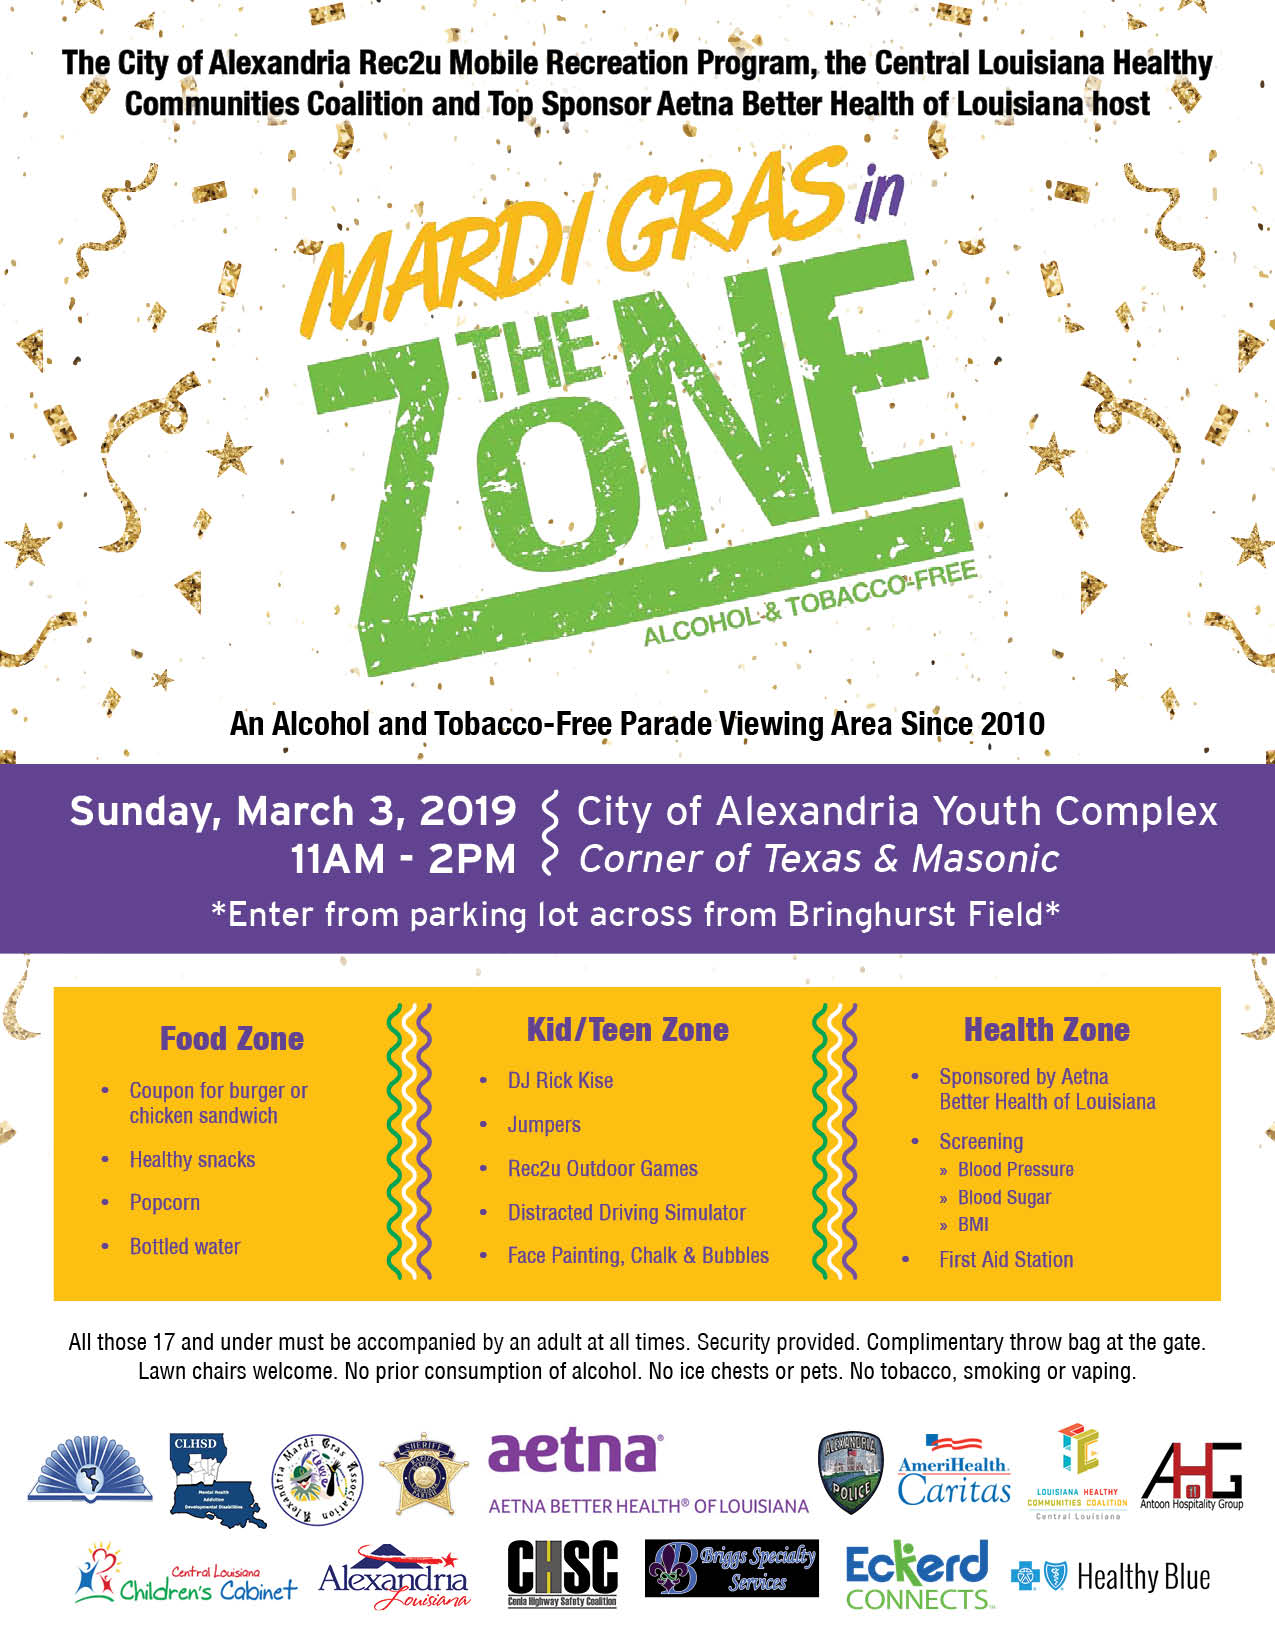 Mardi Gras Free Zone City of Alexandria Youth Complex (Ball fields